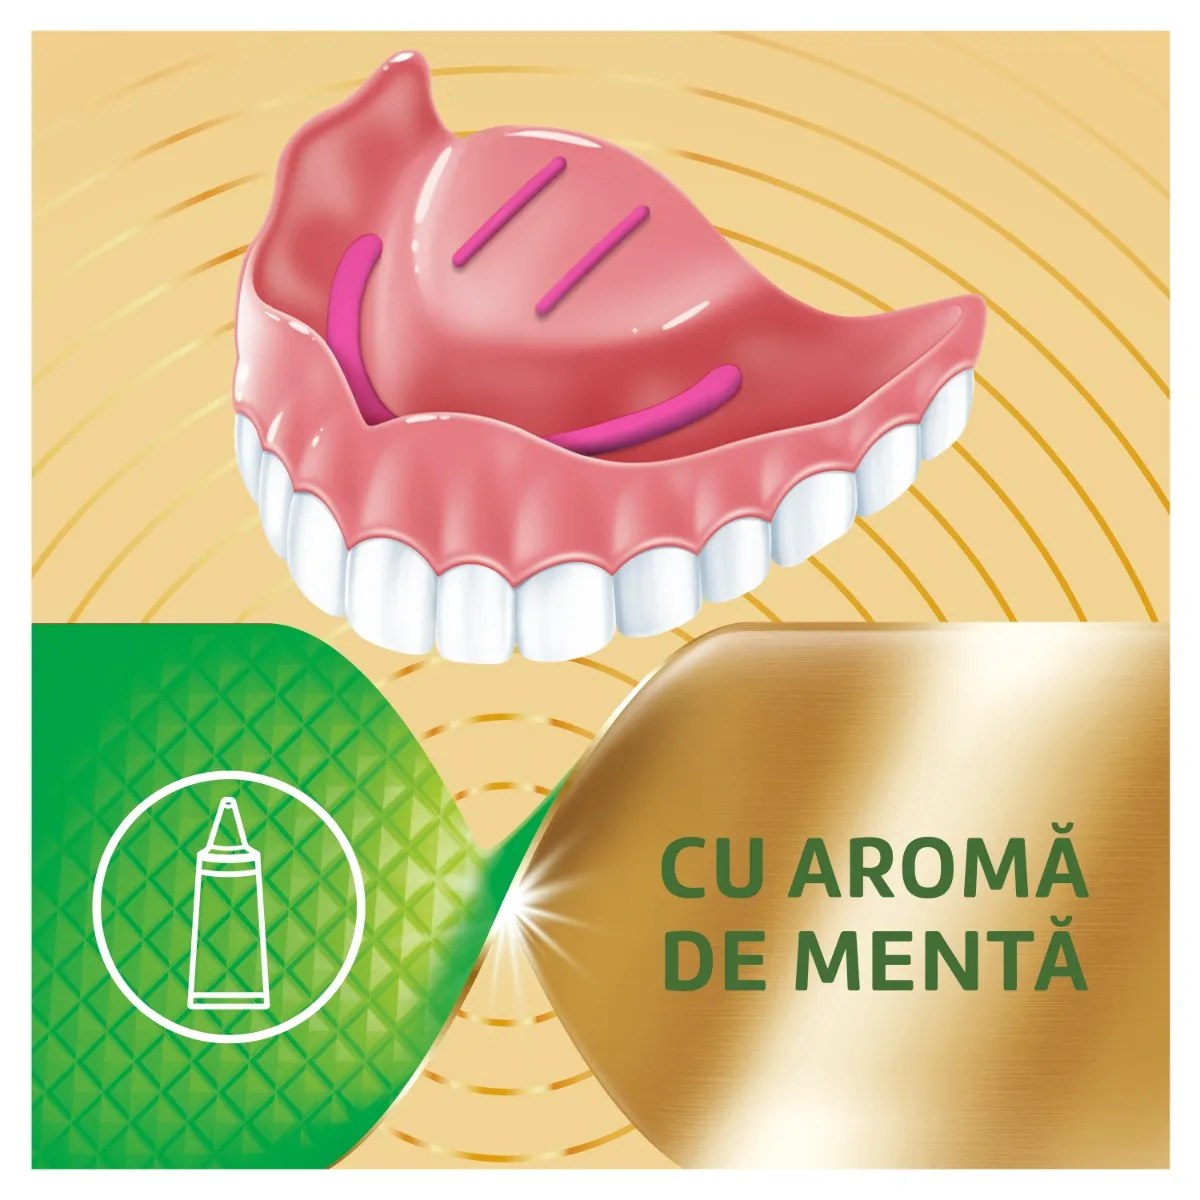 Crema adeziva pentru proteza dentara Max Fixare + Mentol, 40g, Corega 